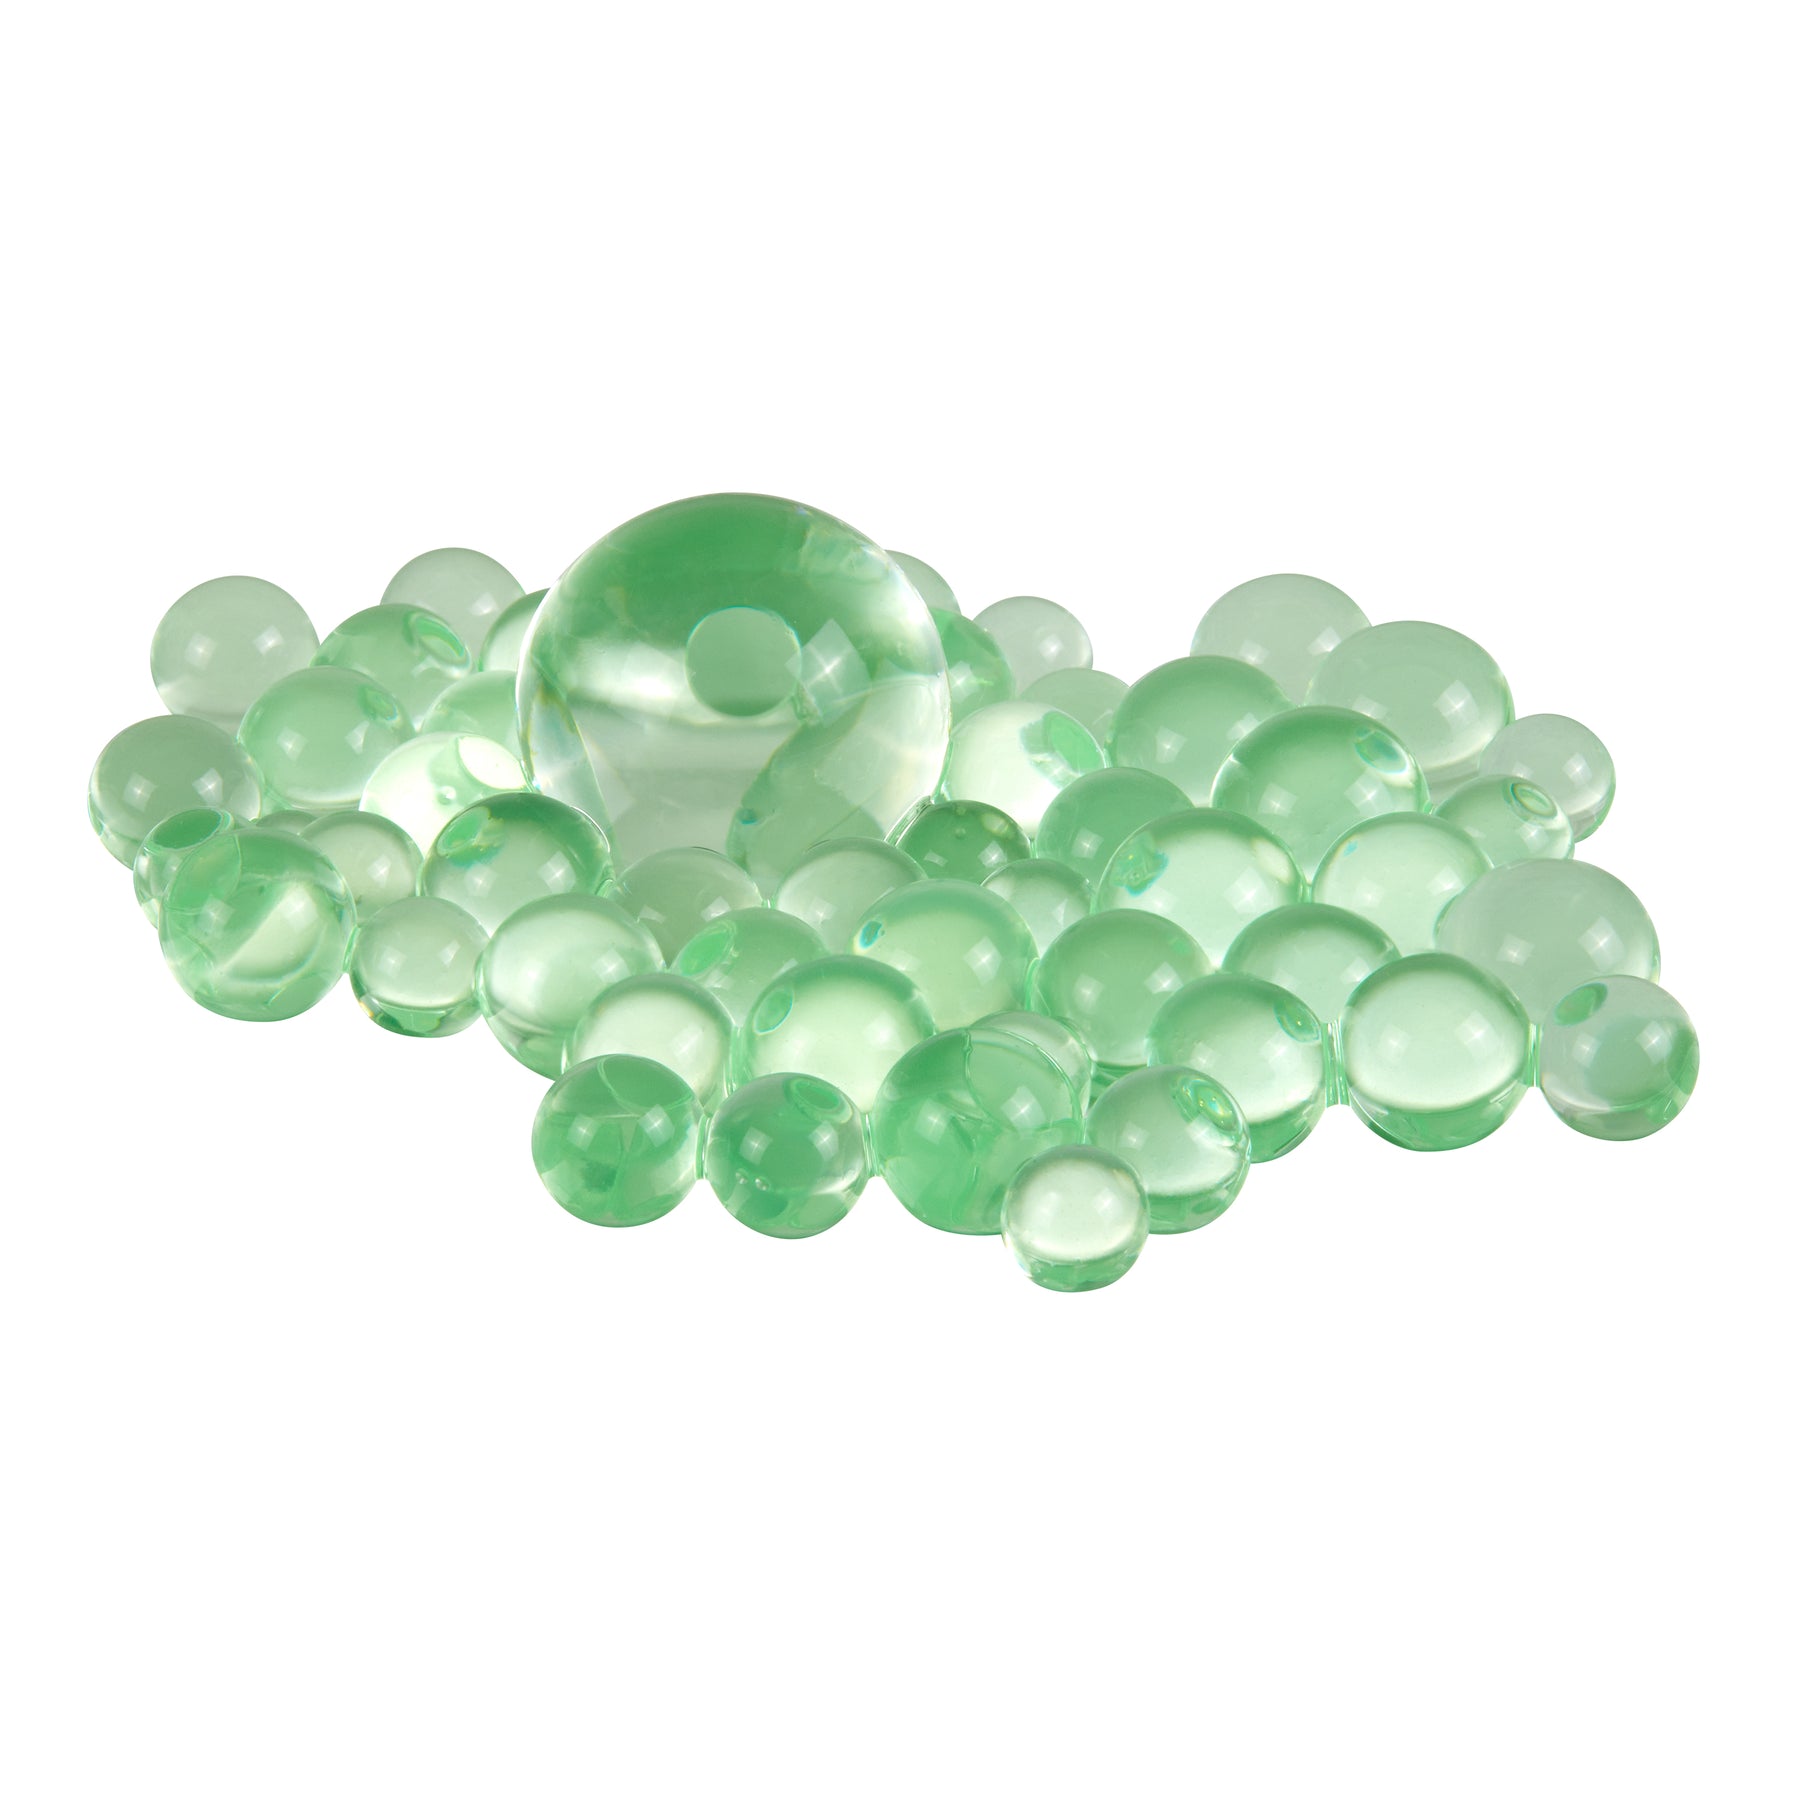 Aqueon - Pure Betta Beads